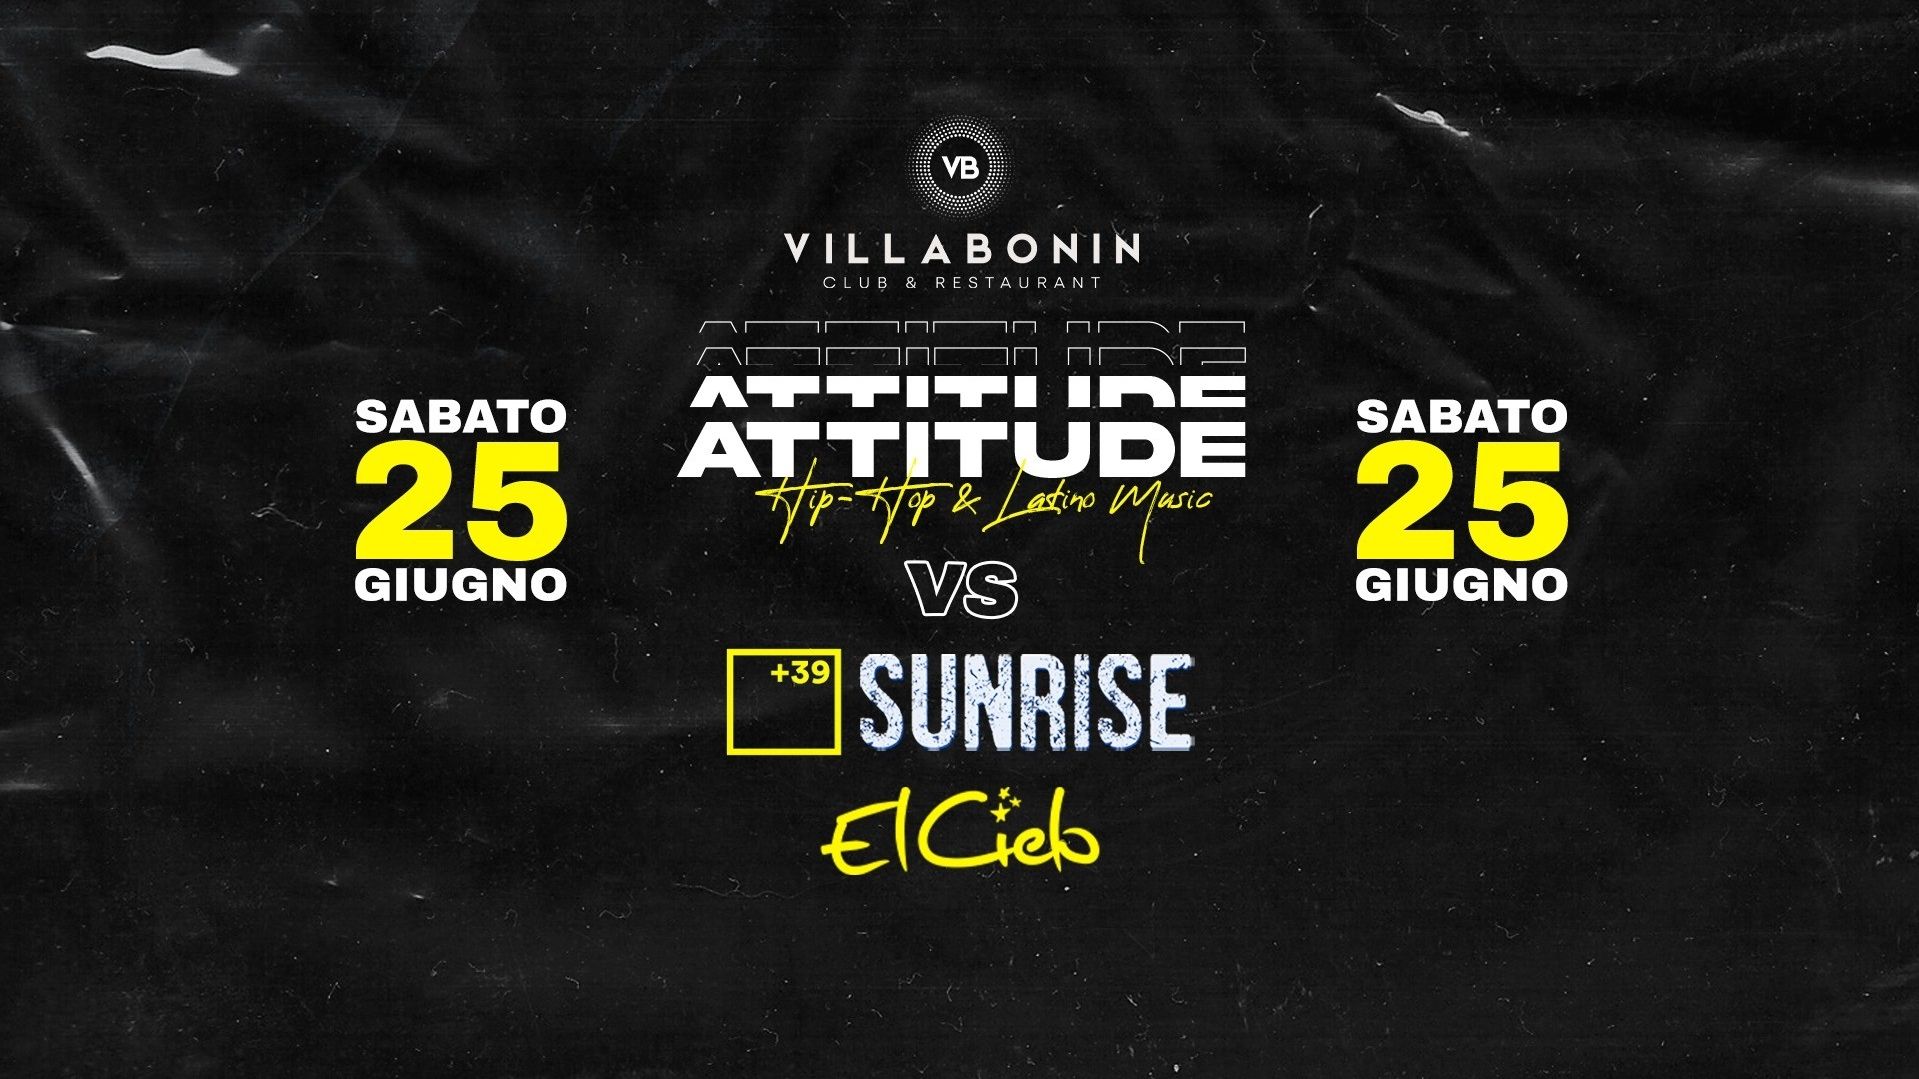 Attitude vs Sunrise